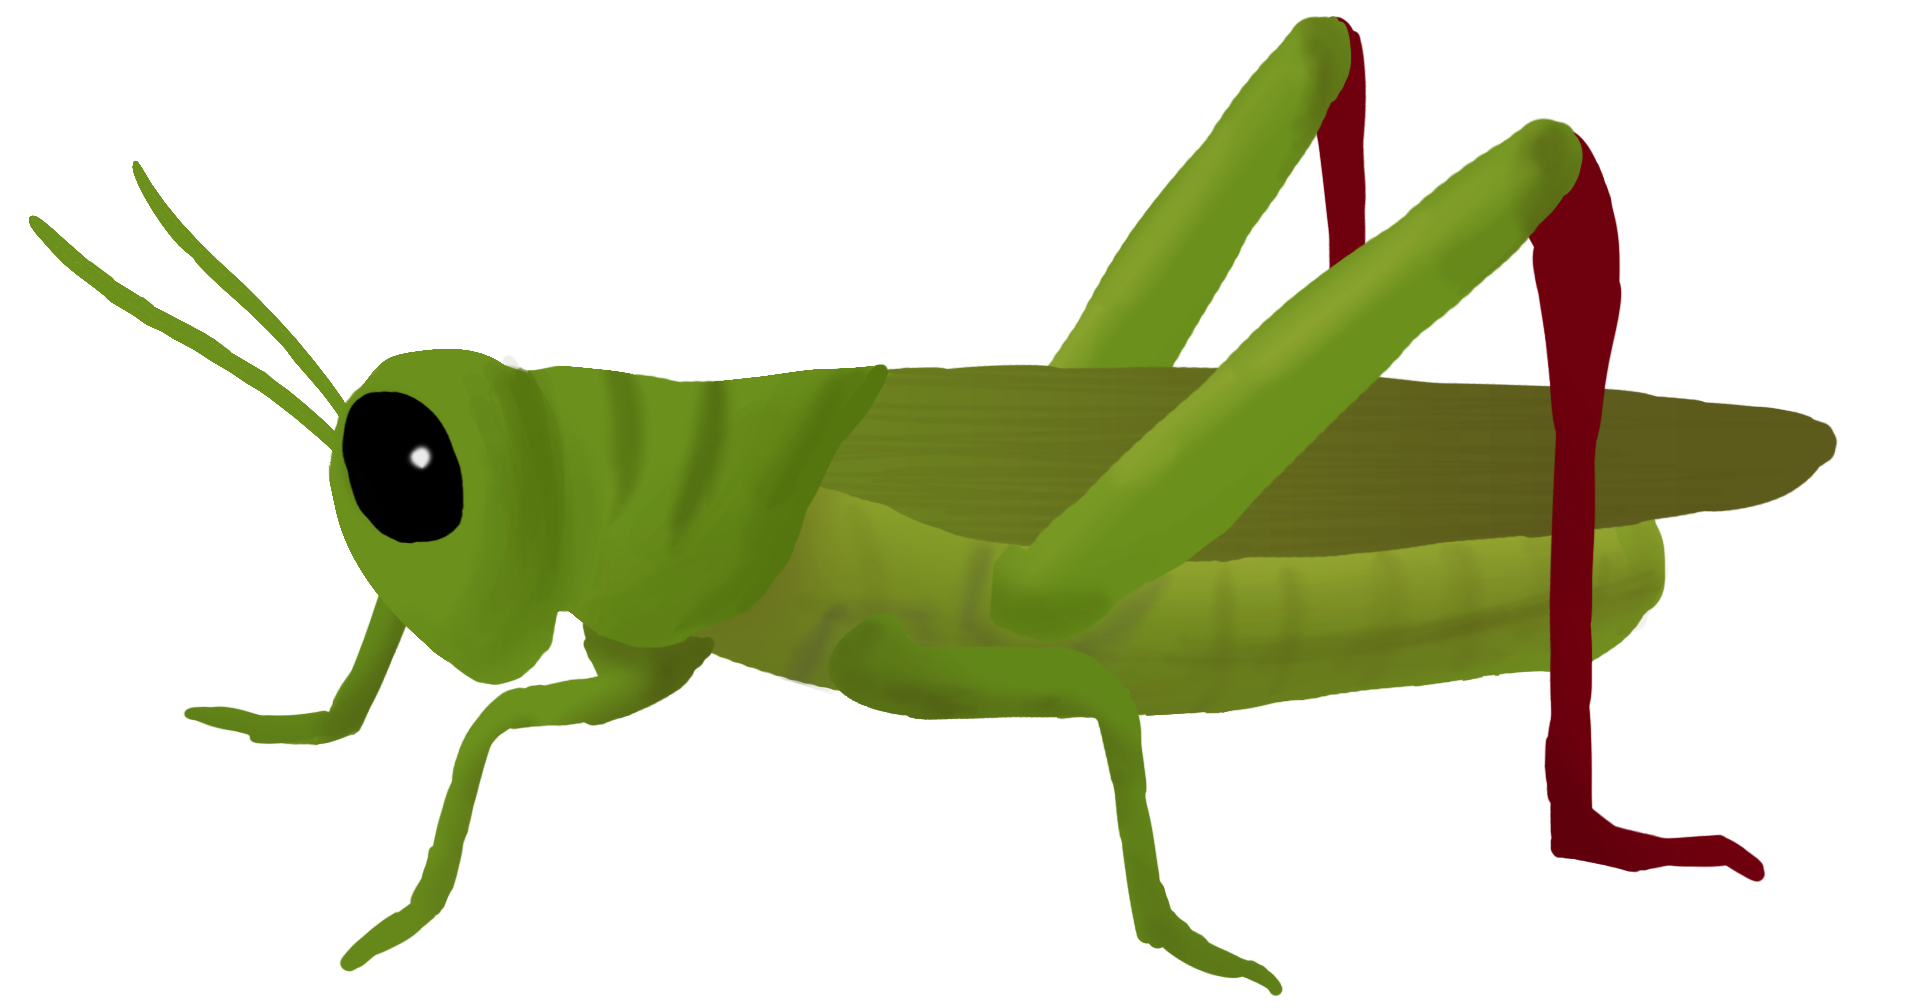 Grasshopper PNG Pic